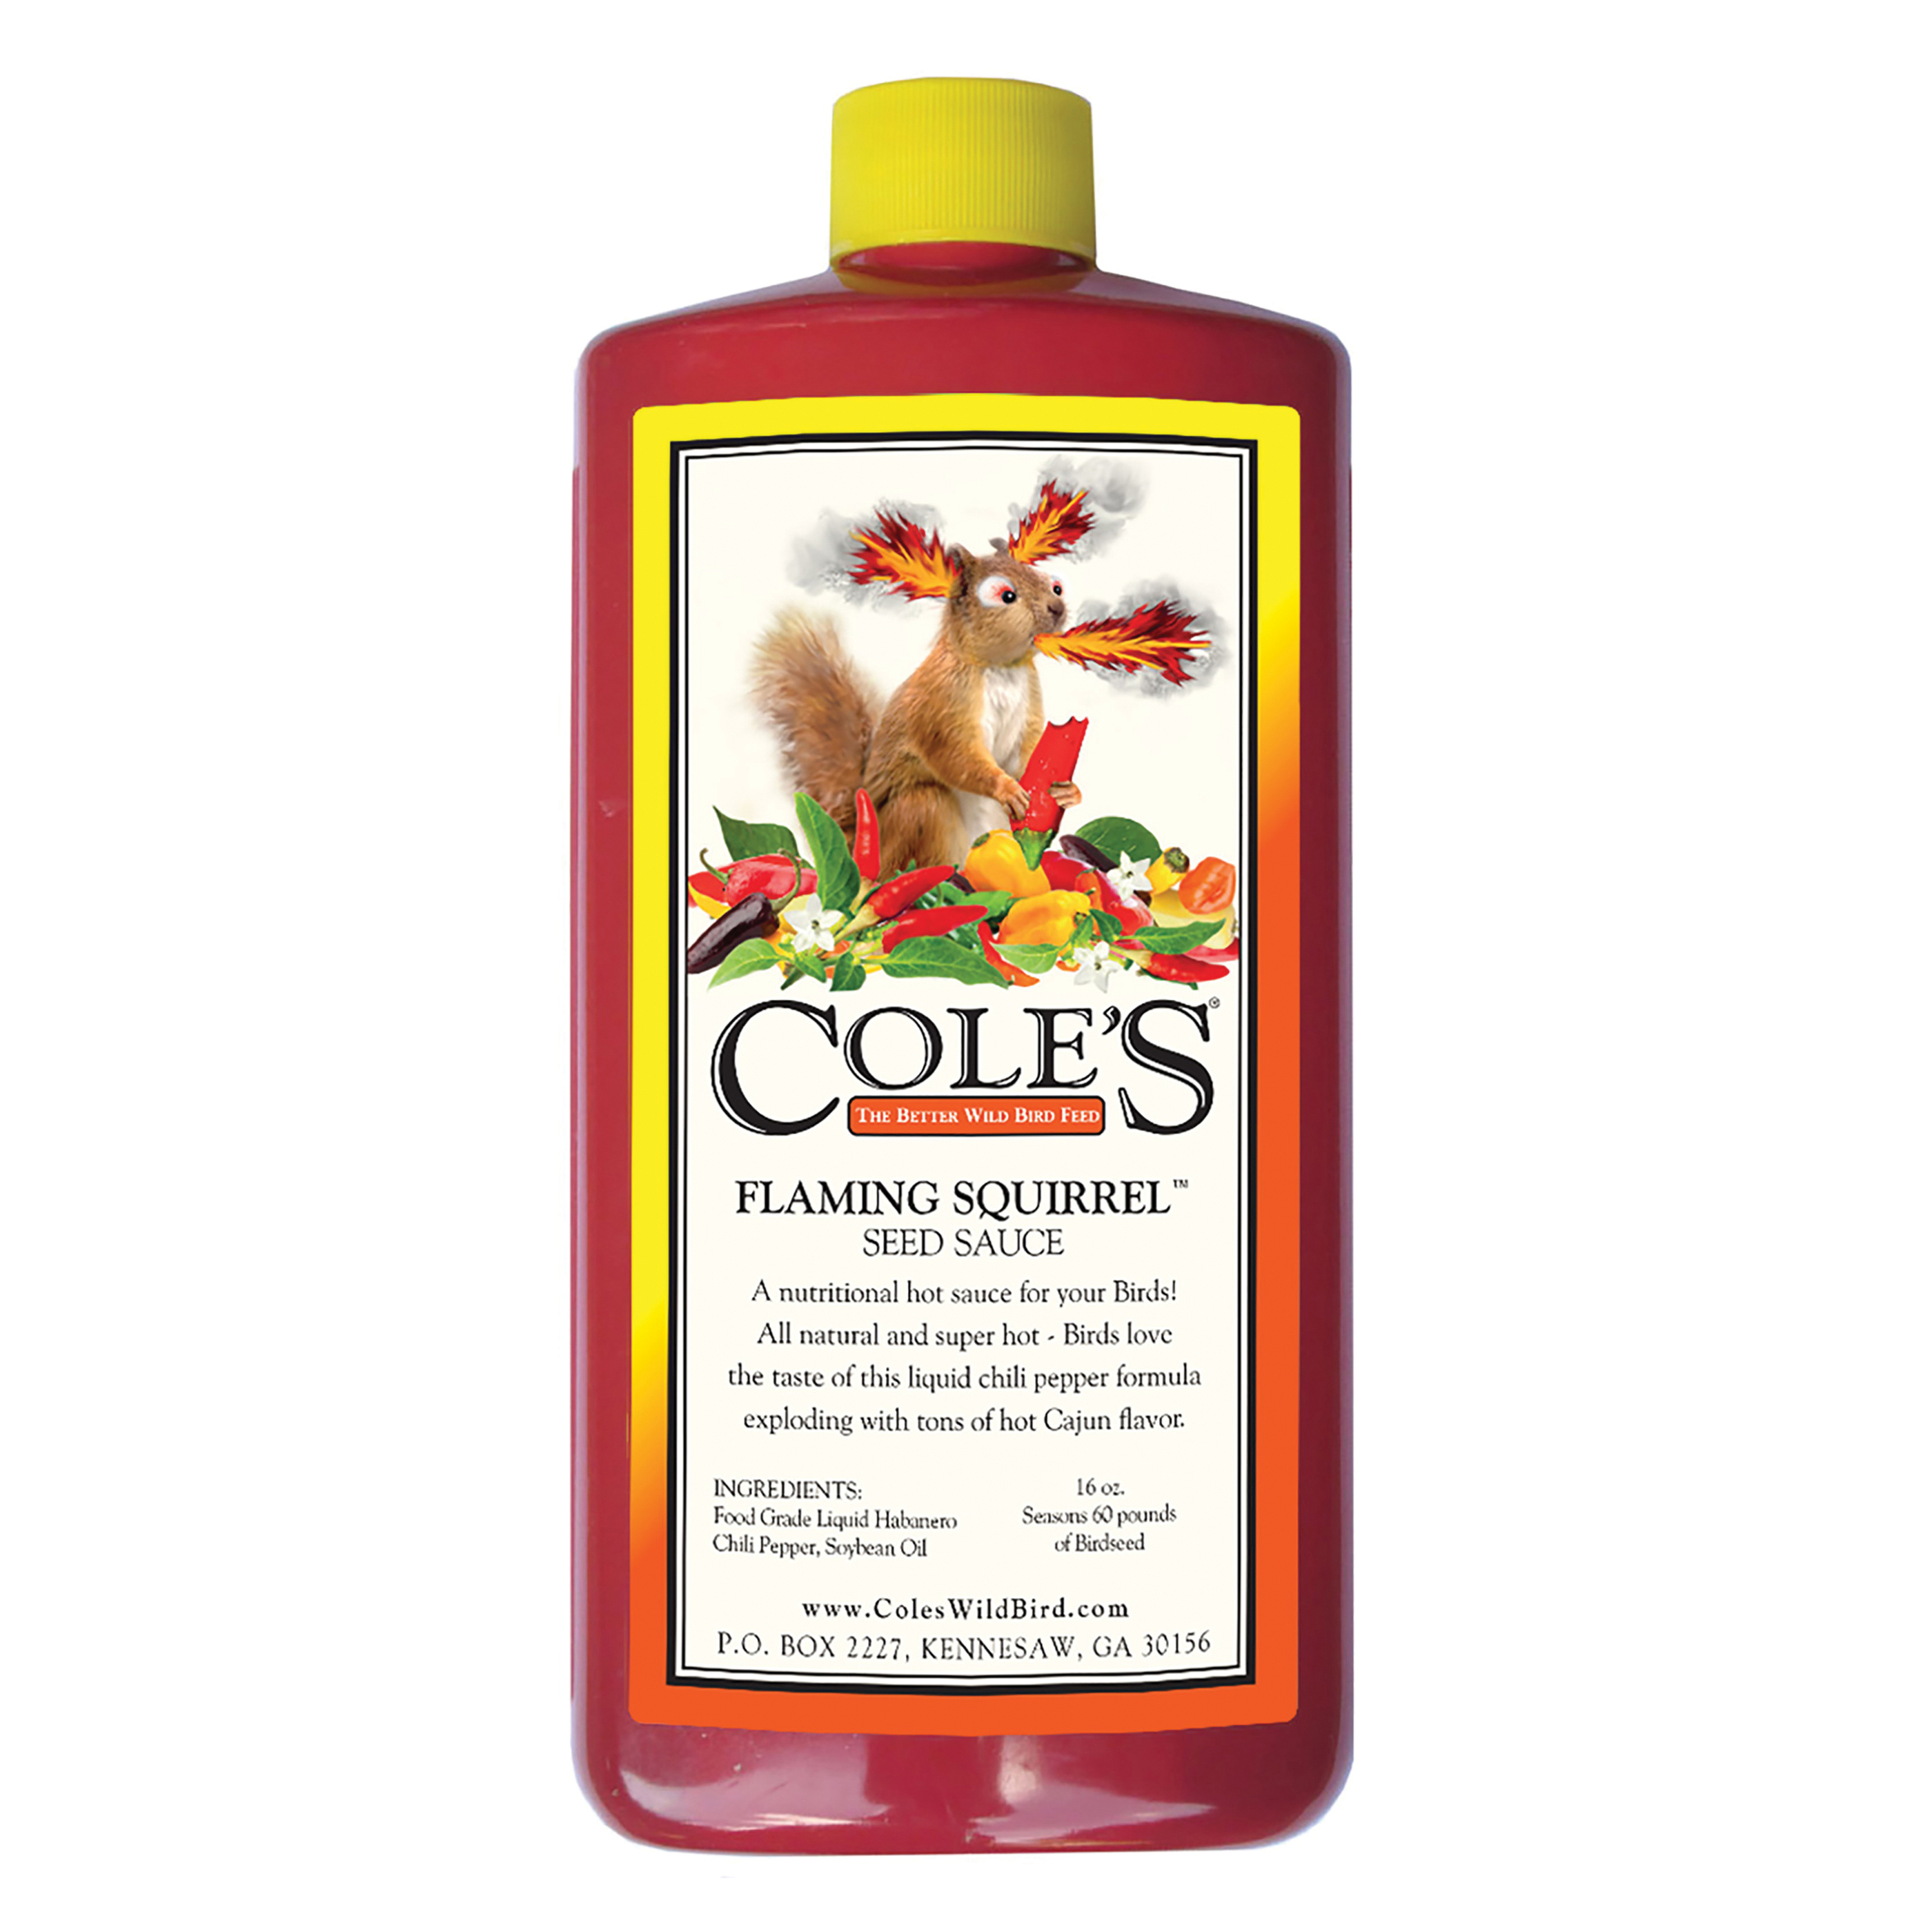 Flaming Squirrel Seed Sauce FS16 Bird Seed, Cajun Flavor, 16 oz Bottle